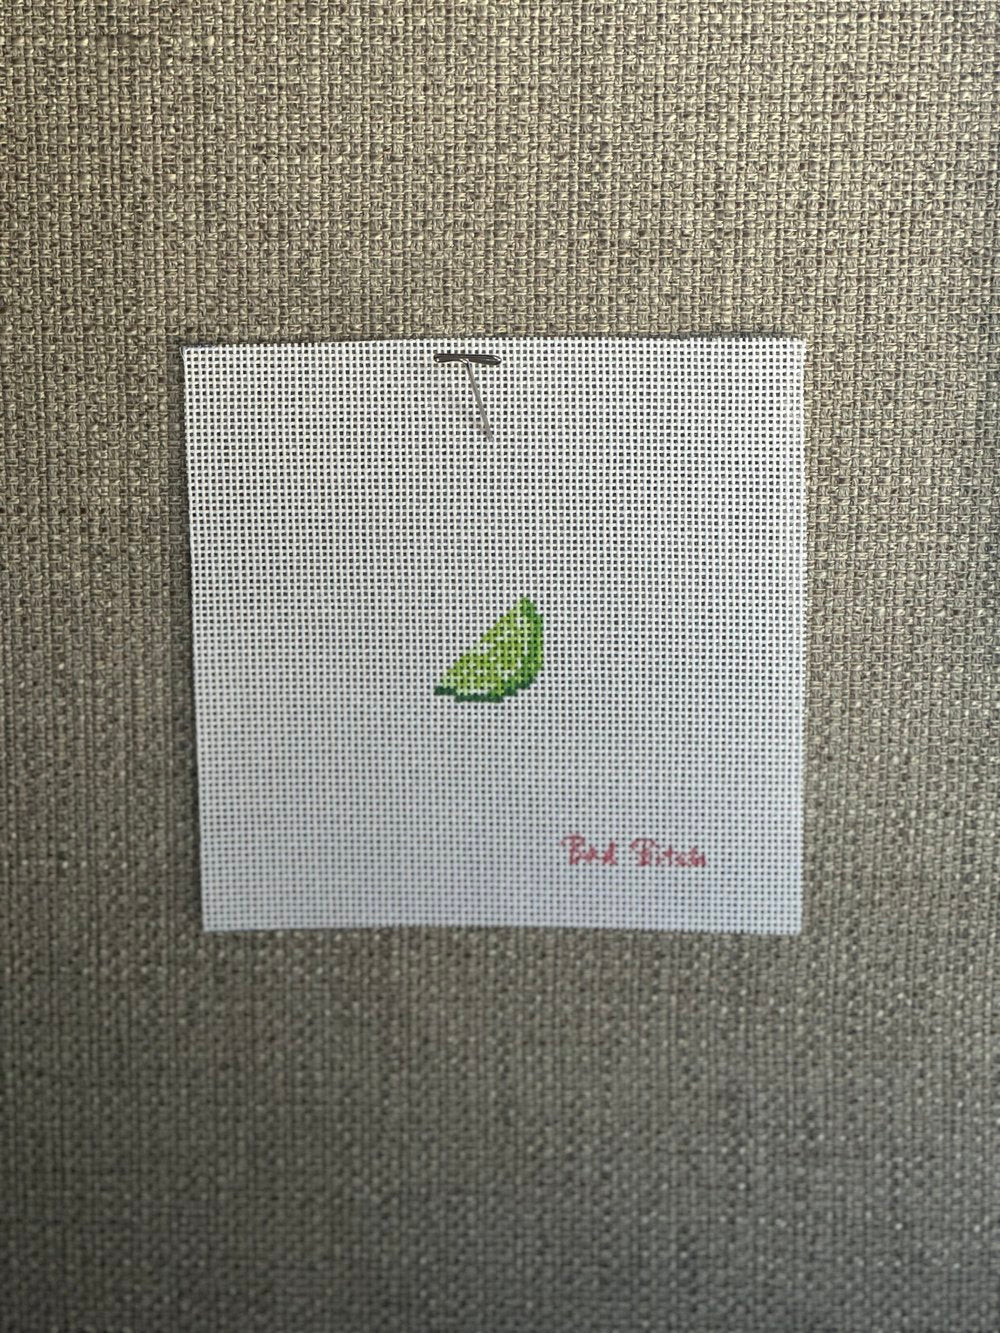 Micro Mini Lime Wedge - The Flying Needles